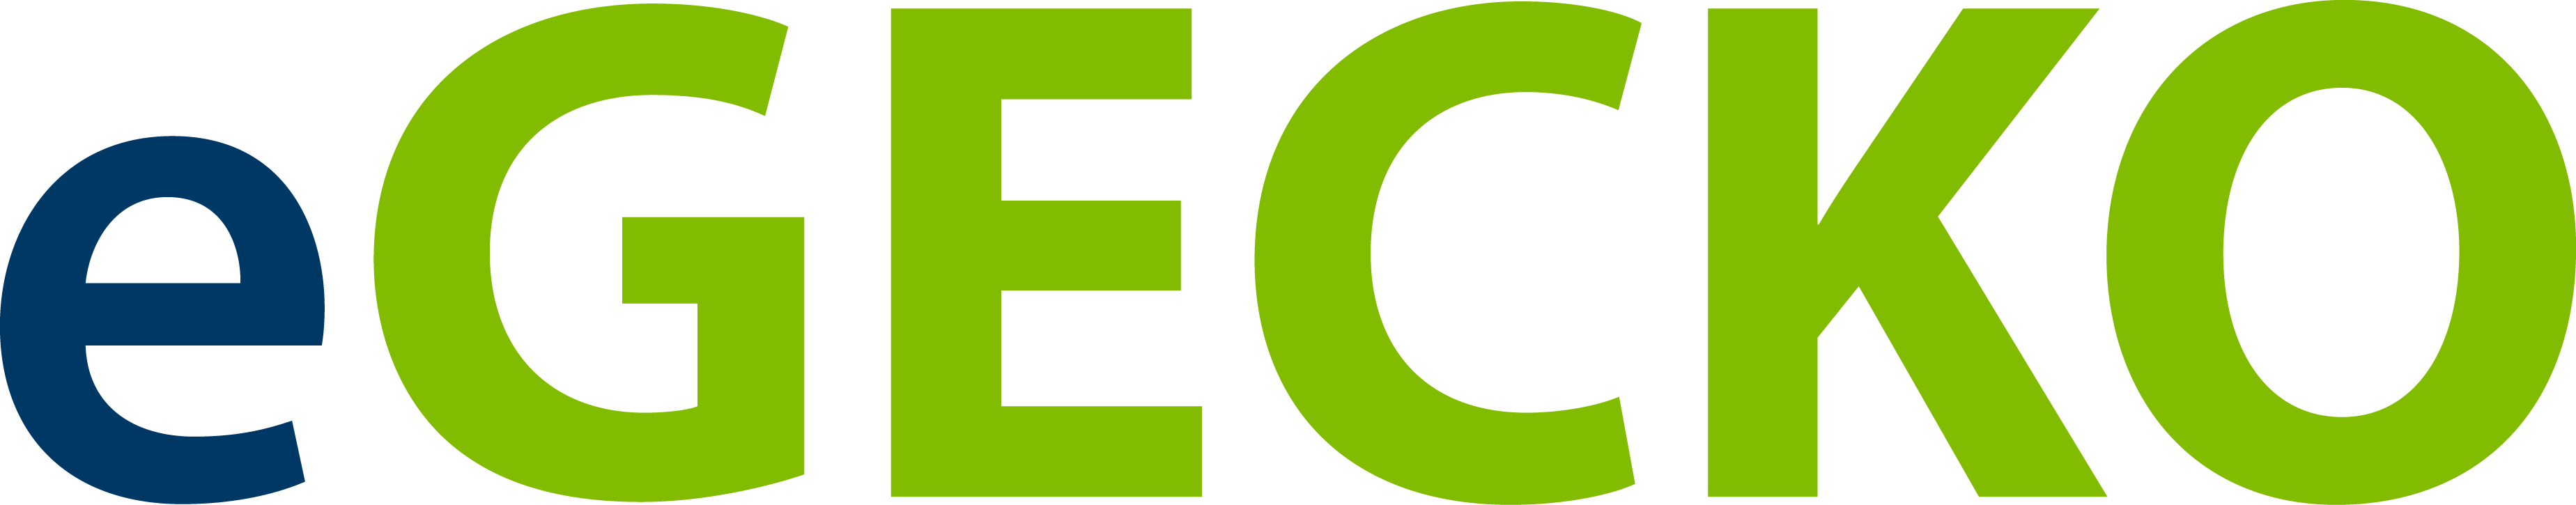 egecko-logo